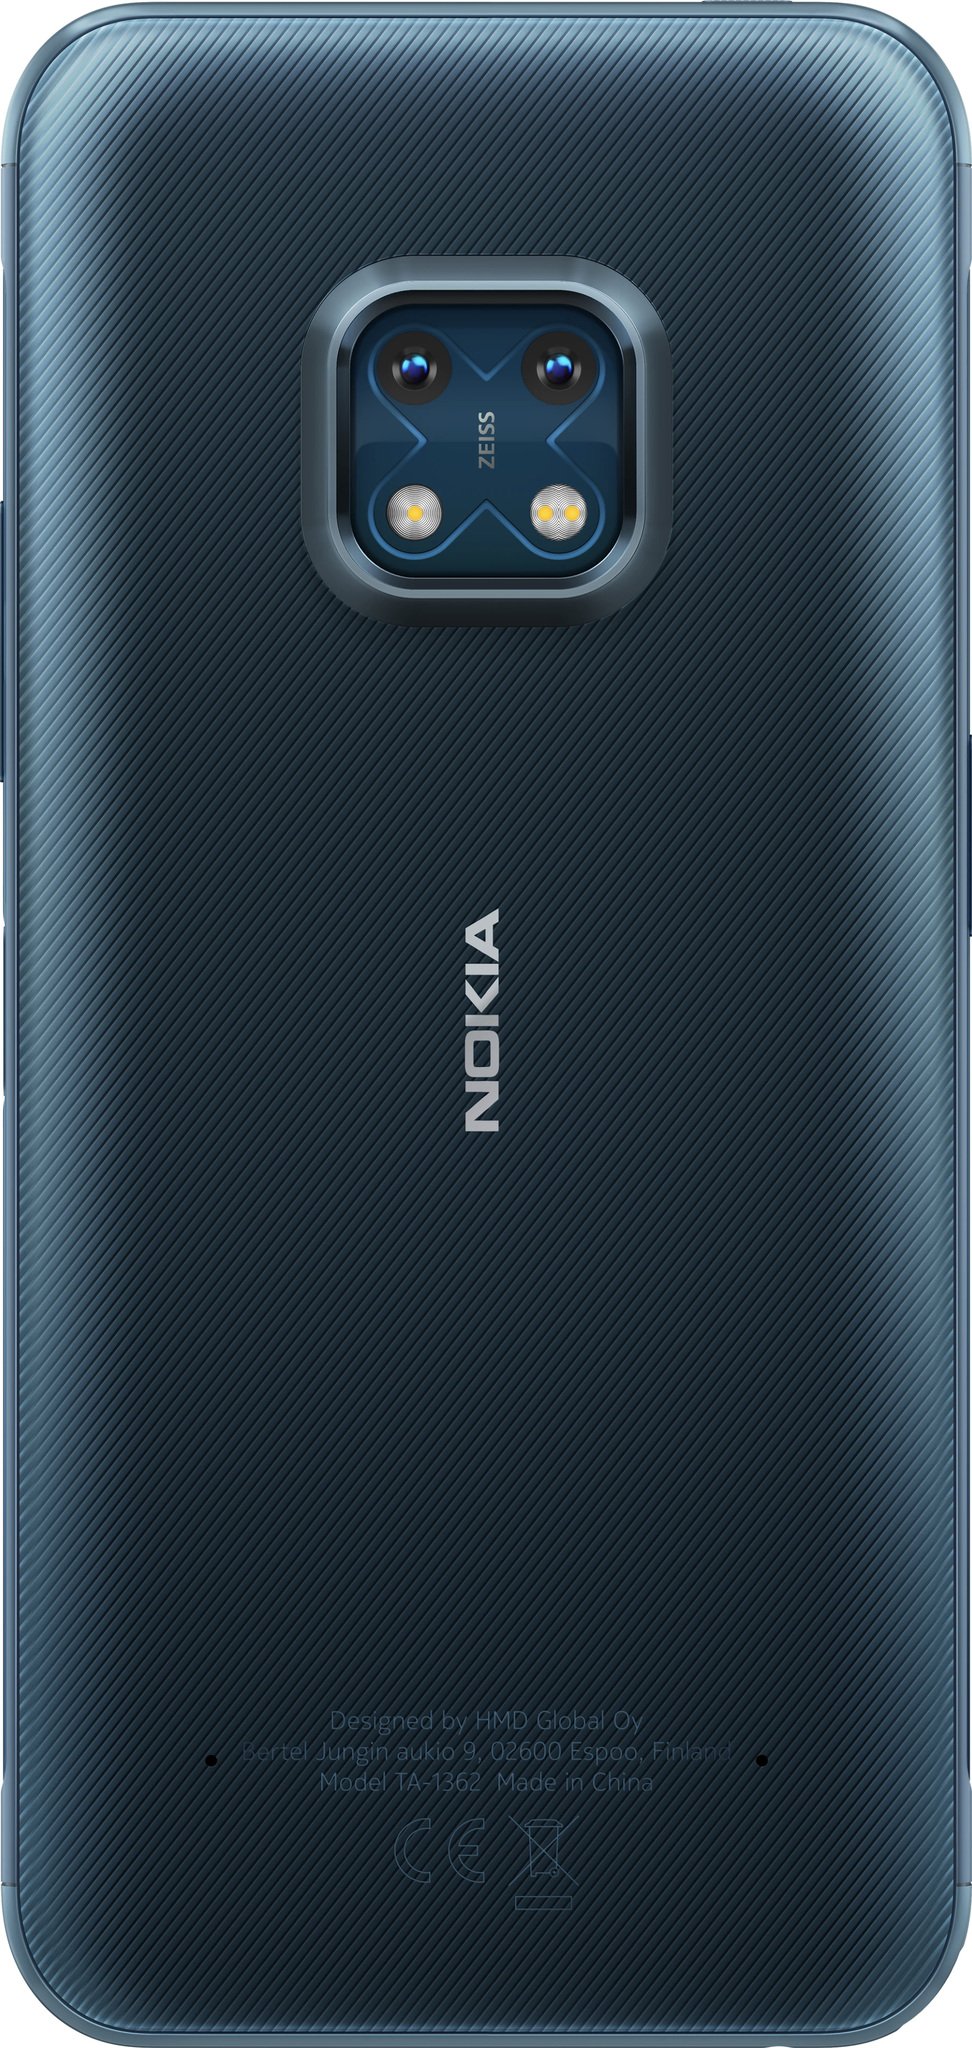 Nokia XR20 Ultrablue Render